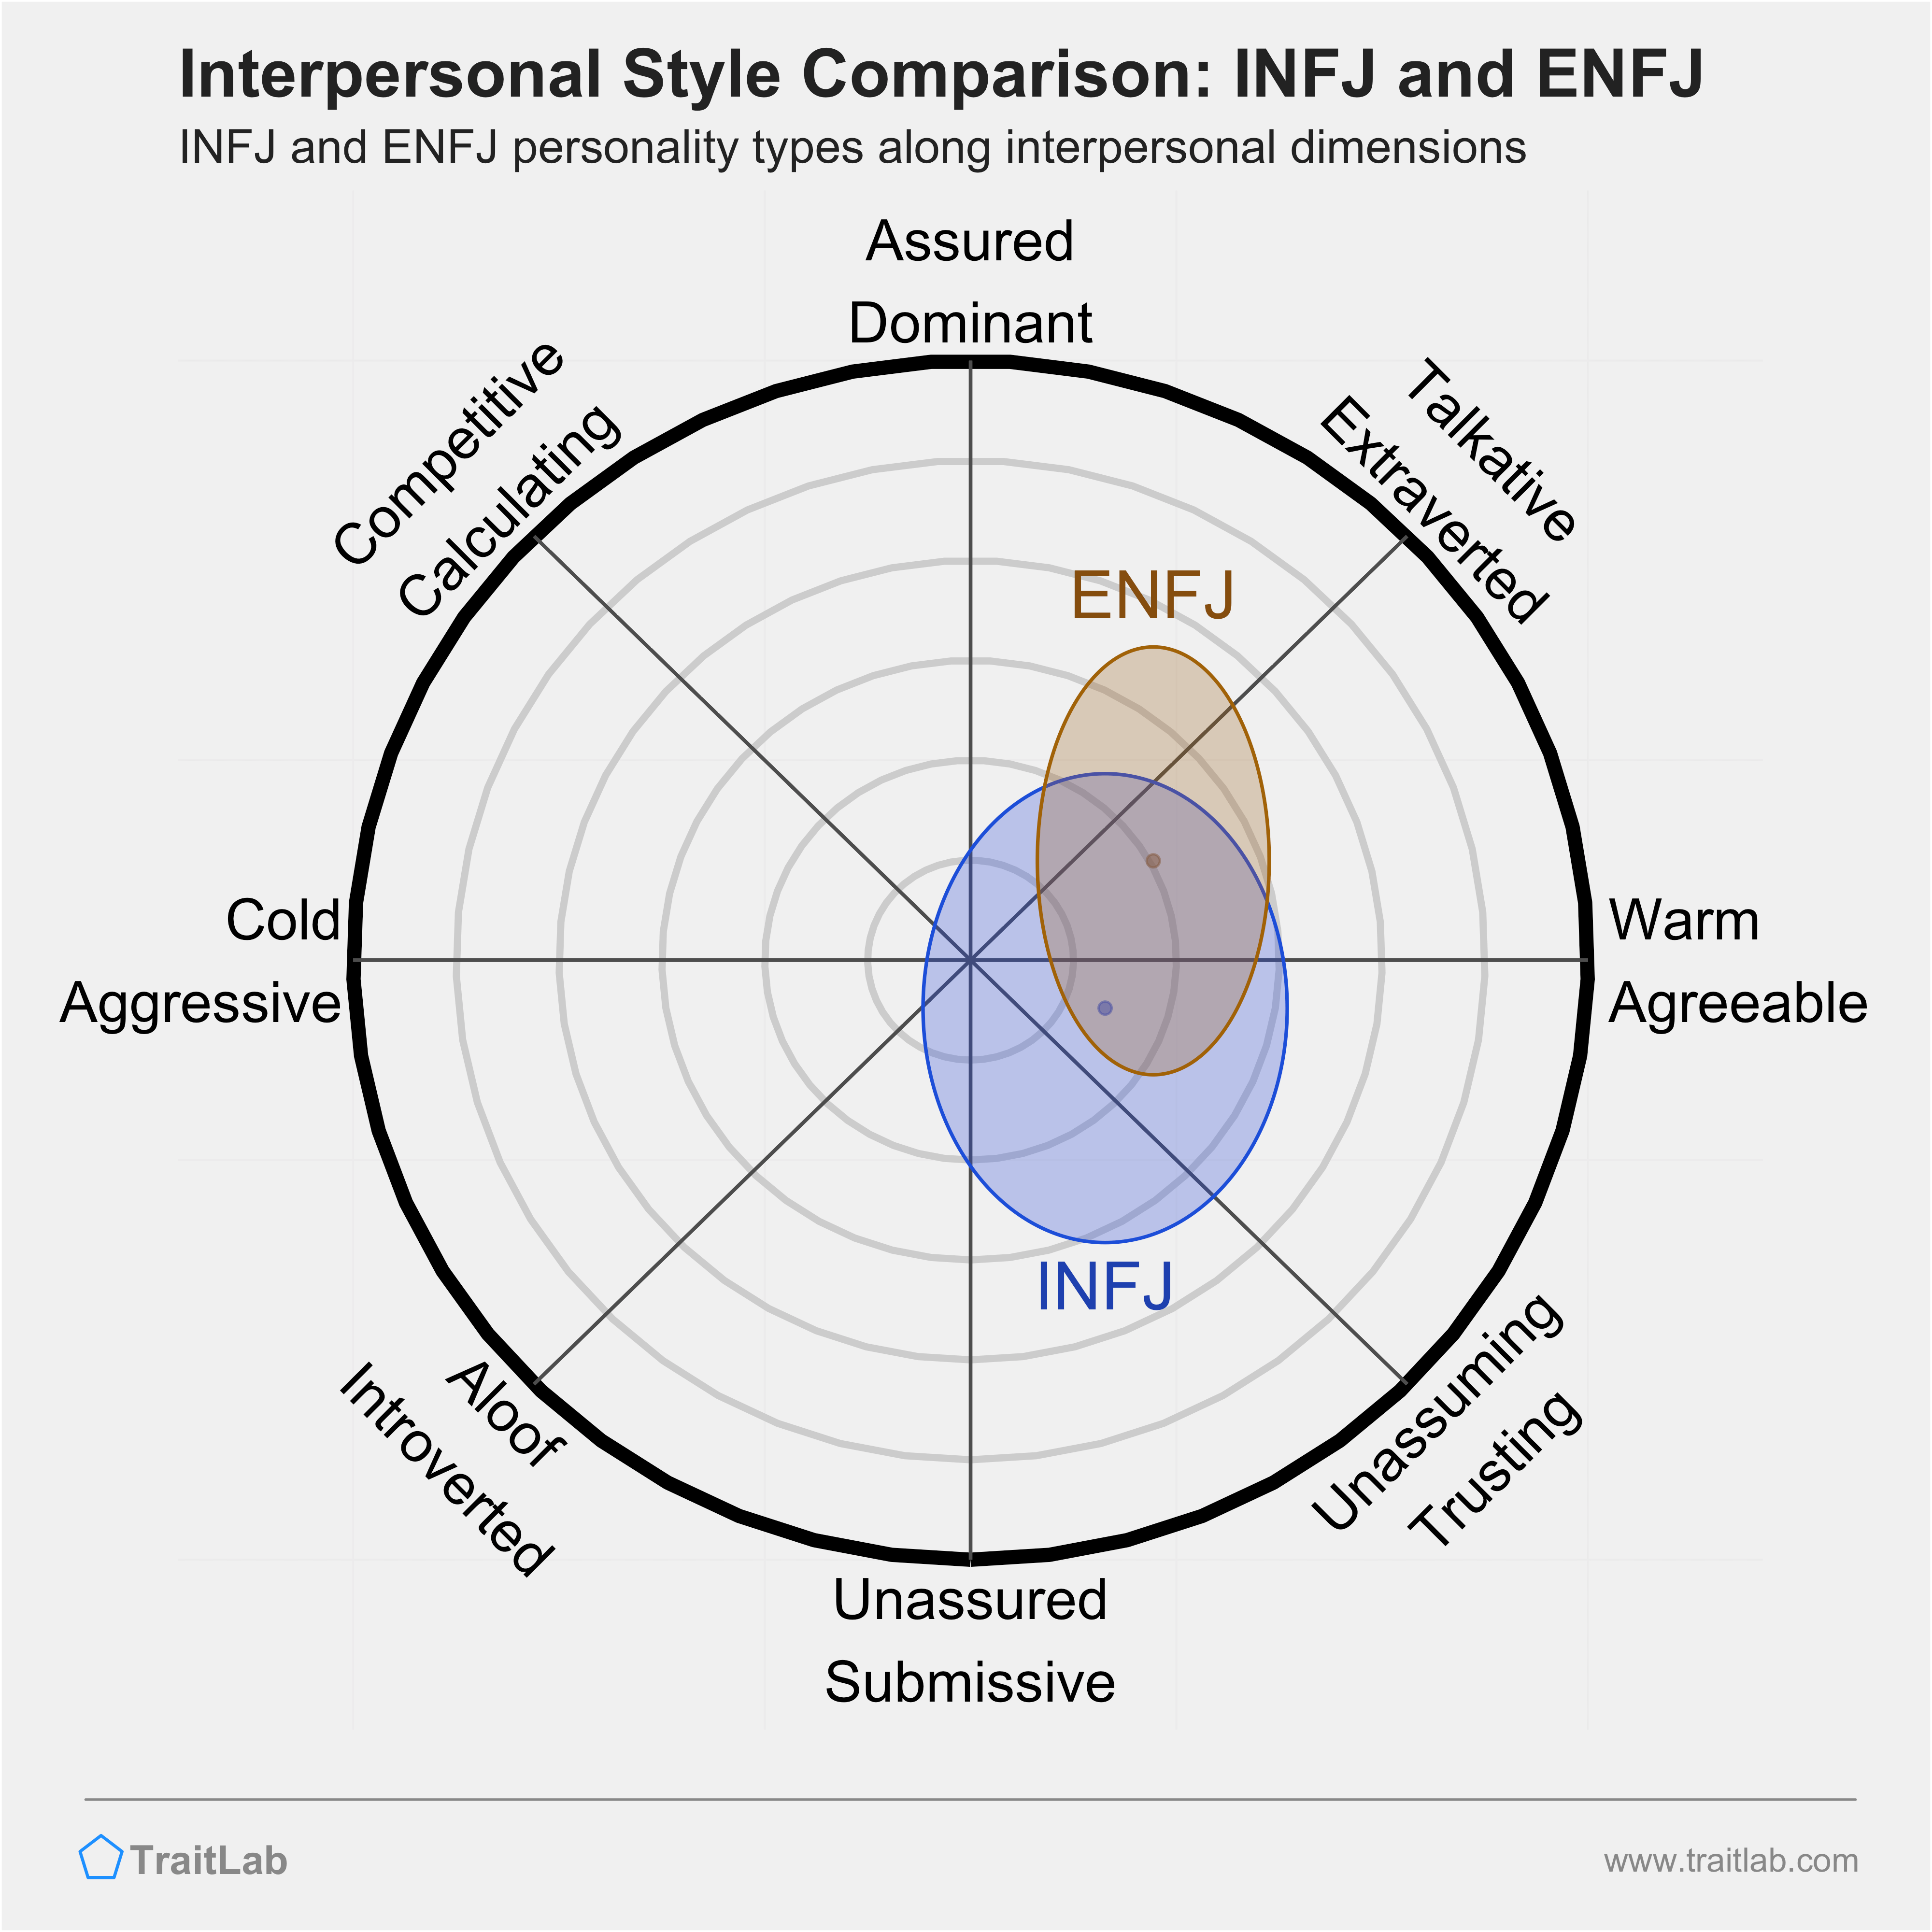 INFJ and ENFJ comparison across interpersonal dimensions